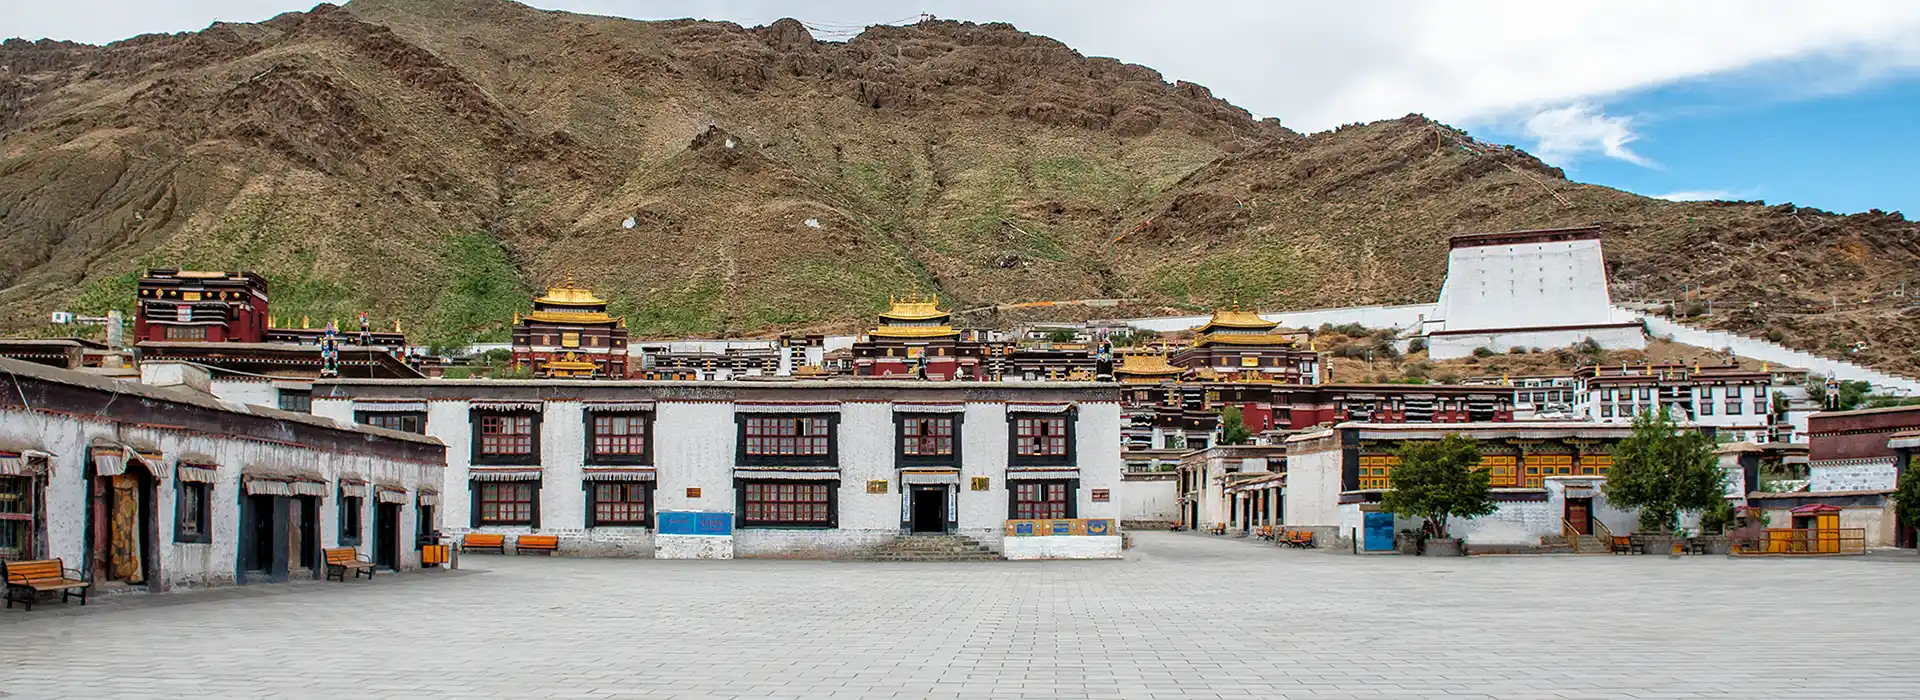 Tashilhunpo Monastery – Tibetan Buddhist monastery located in Shigatse